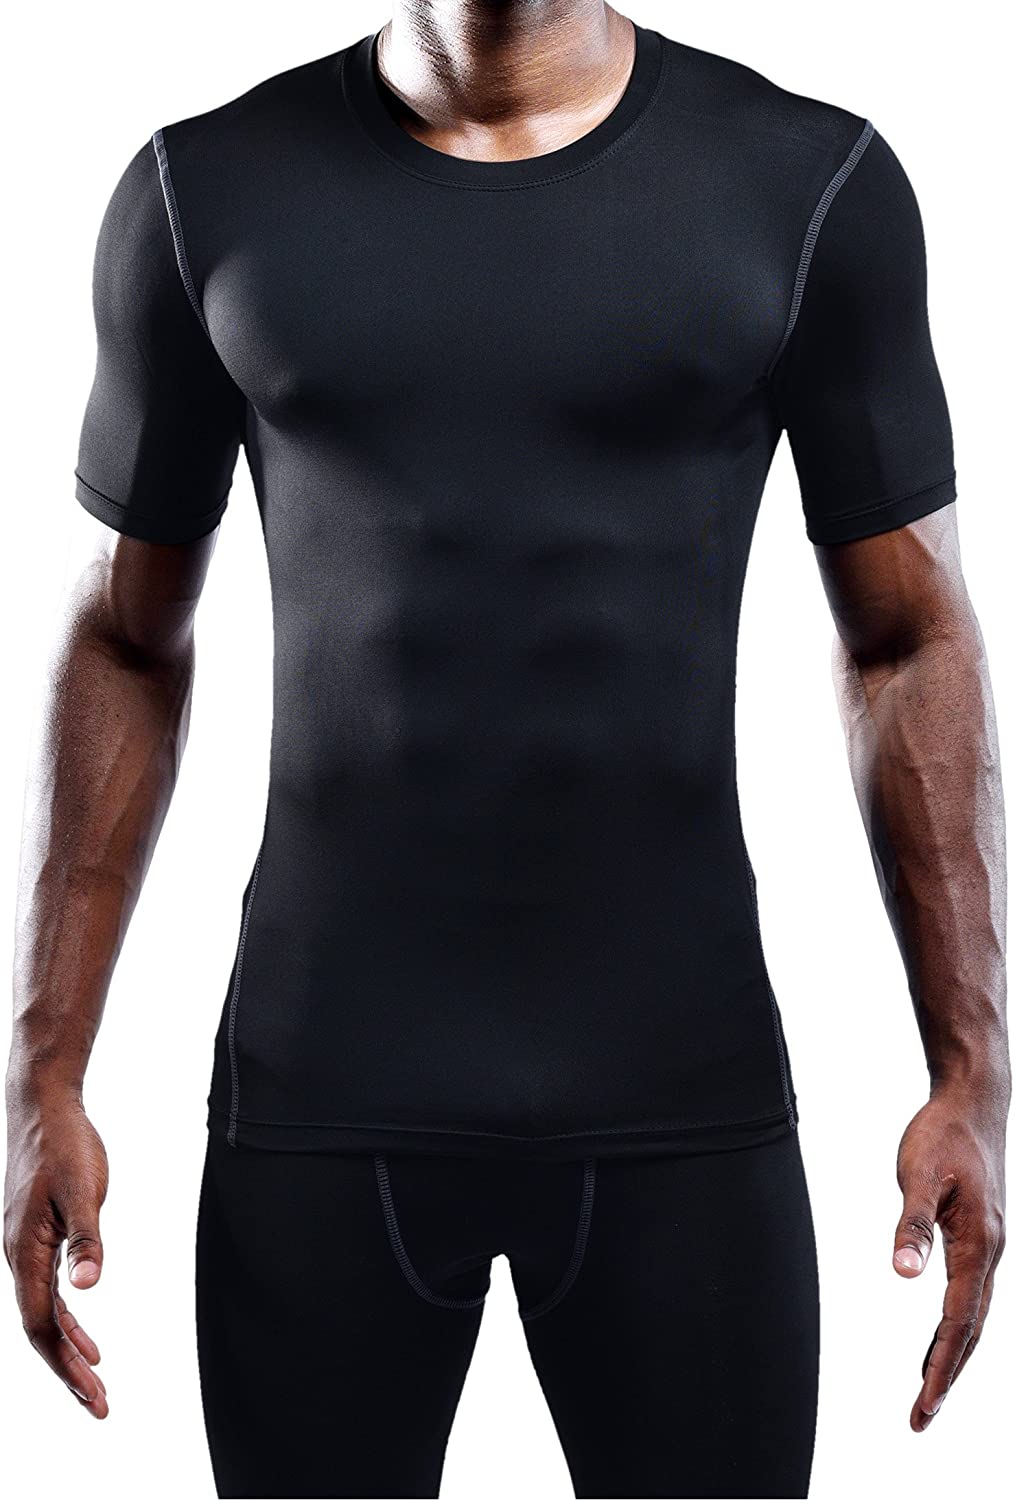 Neleus Men's 3 Pack Athletic Compression Under Base Layer Sport Shirt ...